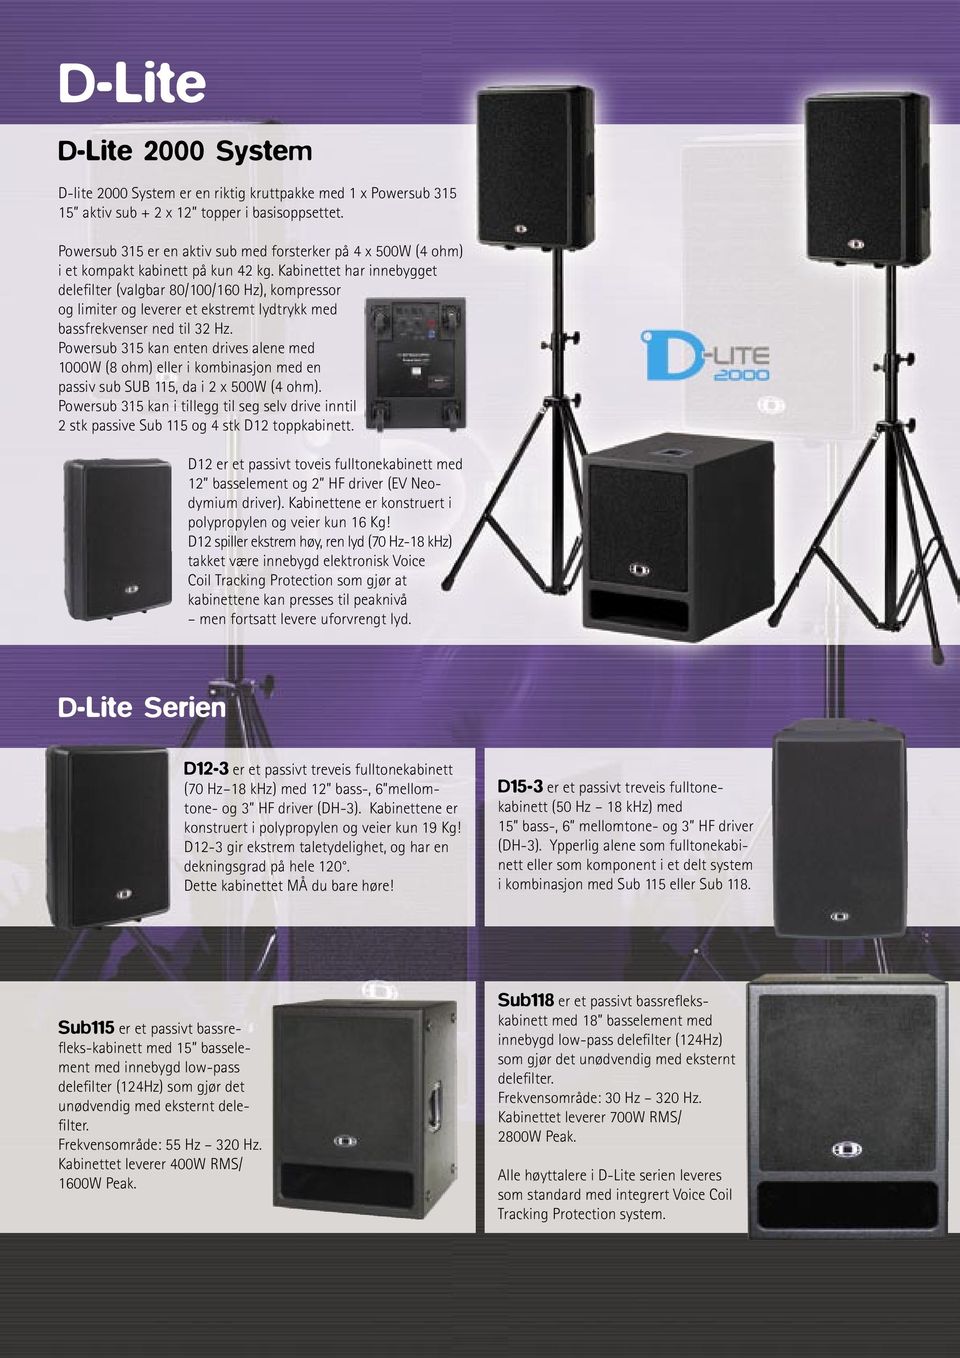 Kabinettet har innebygget delefilter (valgbar 80/100/160 Hz), kompressor og limiter og leverer et ekstremt lydtrykk med bassfrekvenser ned til 32 Hz.